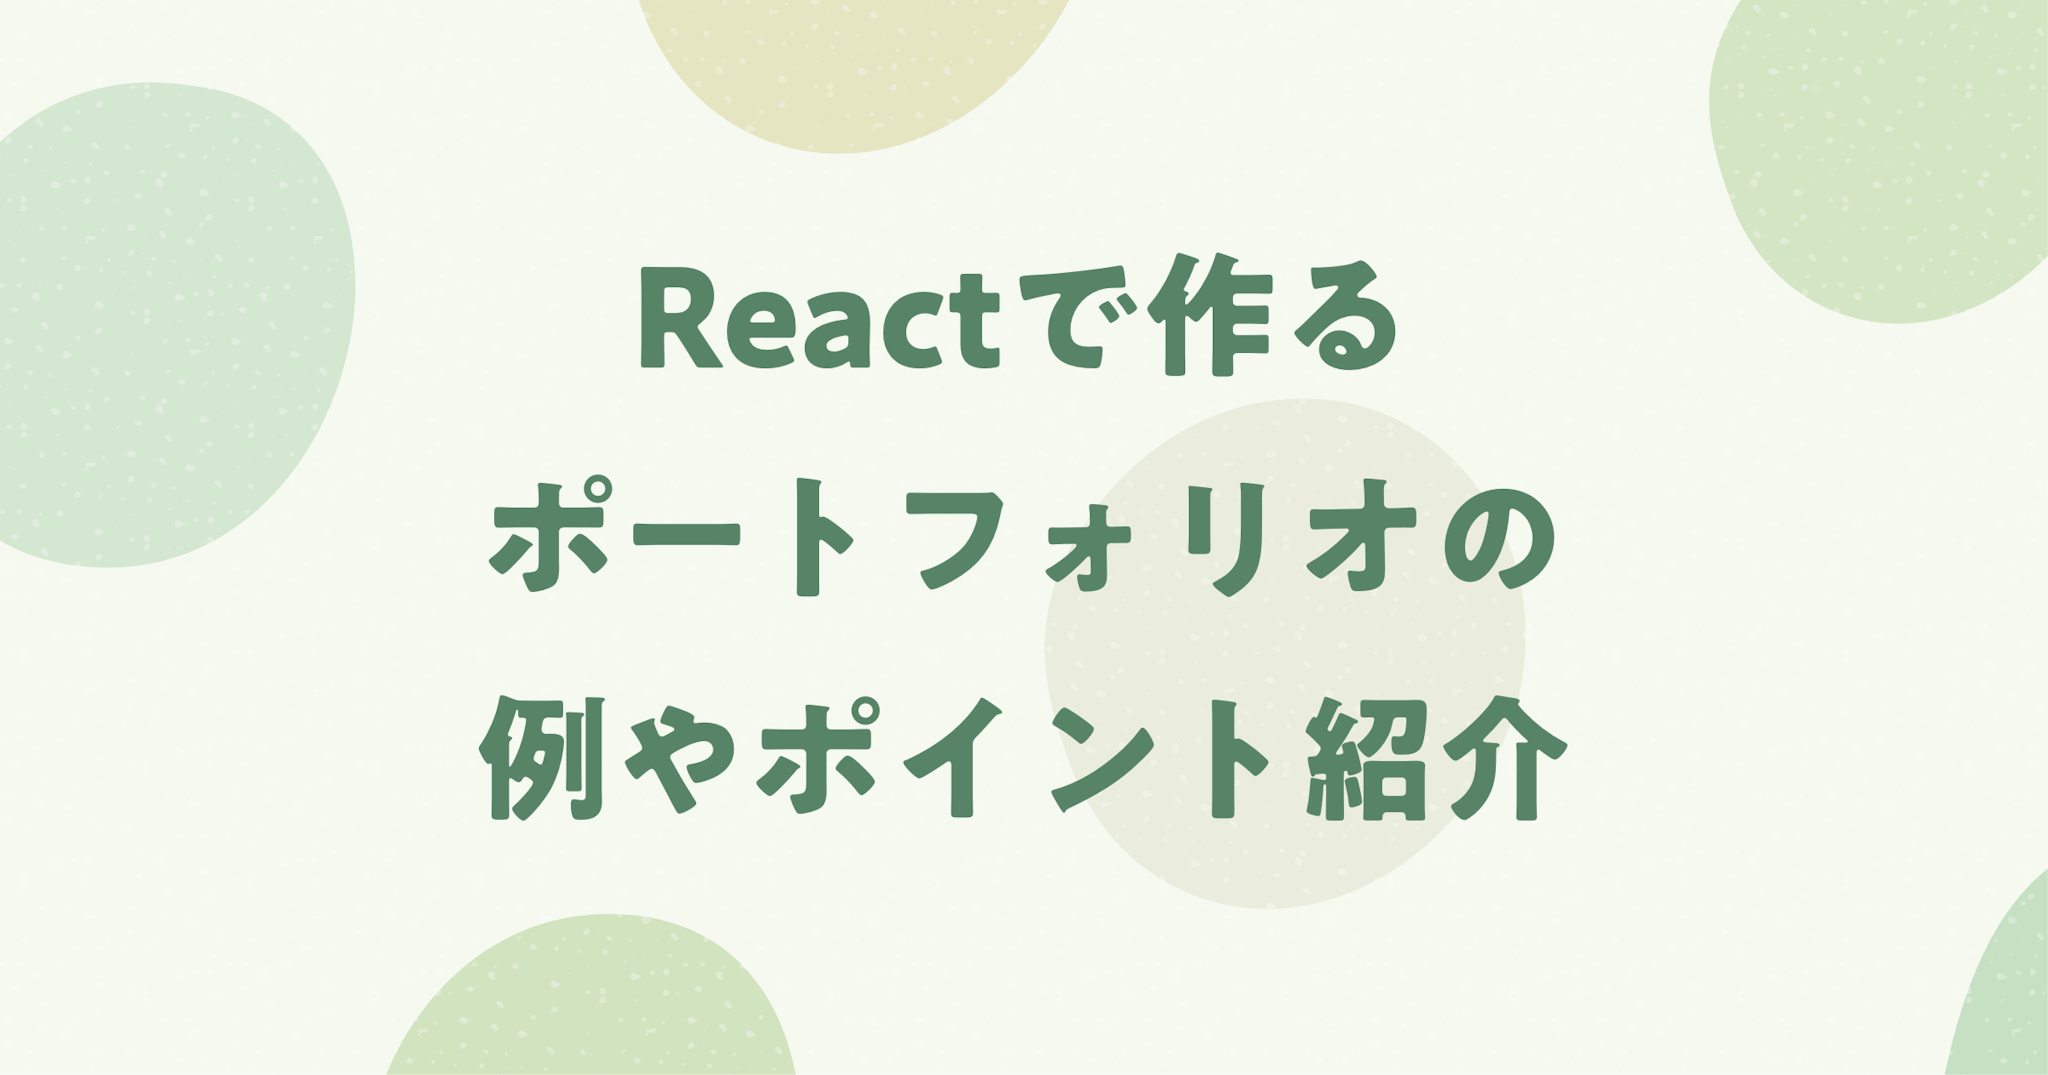 React / Next.jsで作るポートフォリオの例やポイントを紹介！